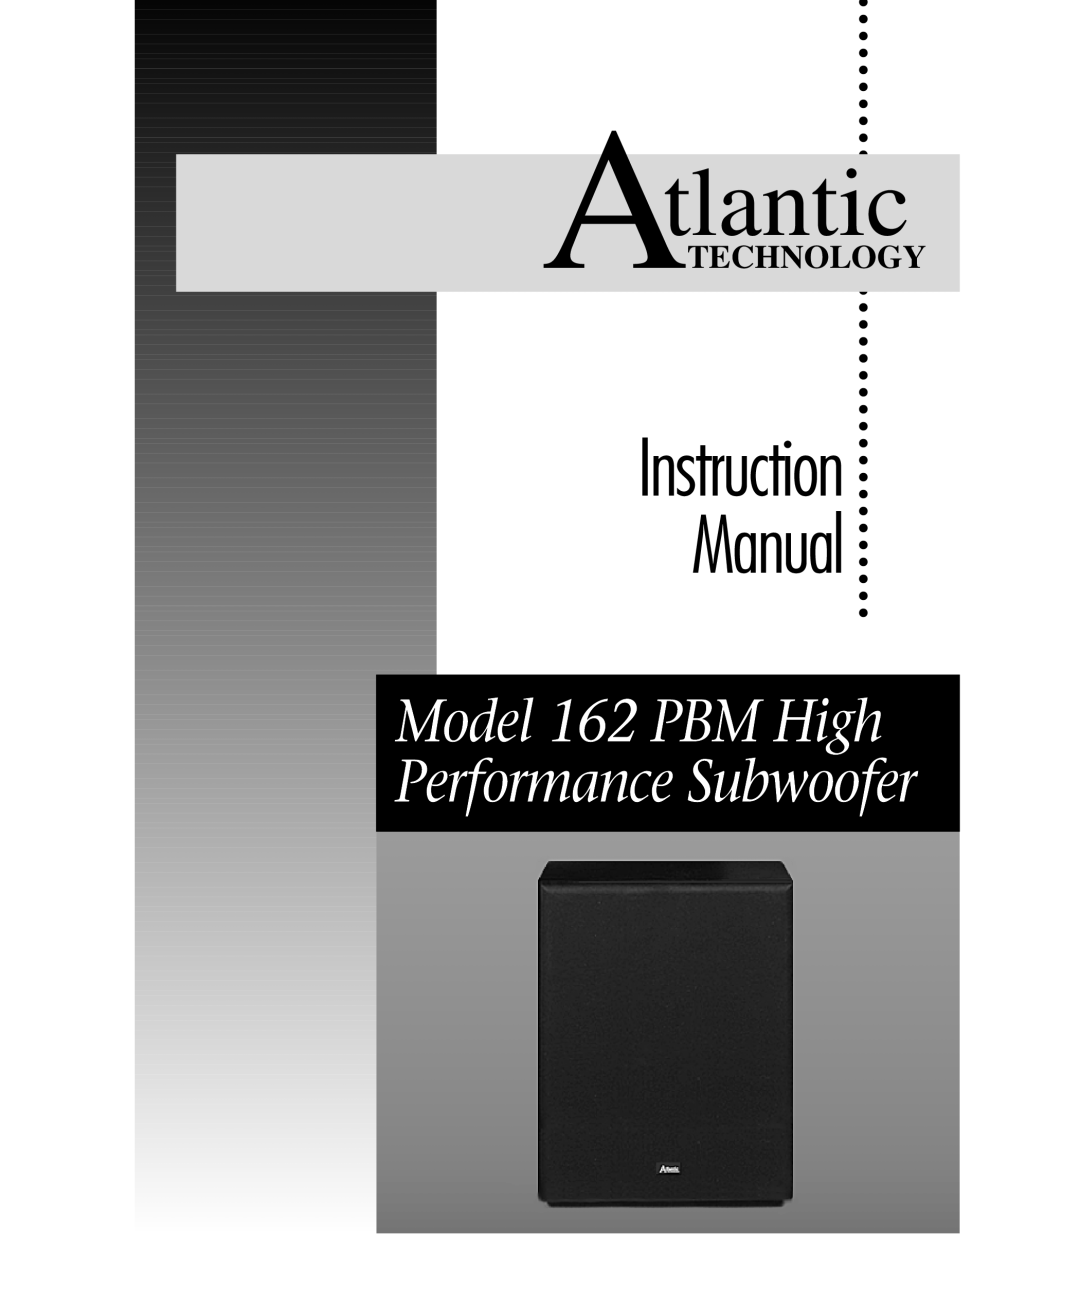 Atlantic Technology instruction manual Atlantic, Model 162 PBM High Performance Subwoofer, Technology 